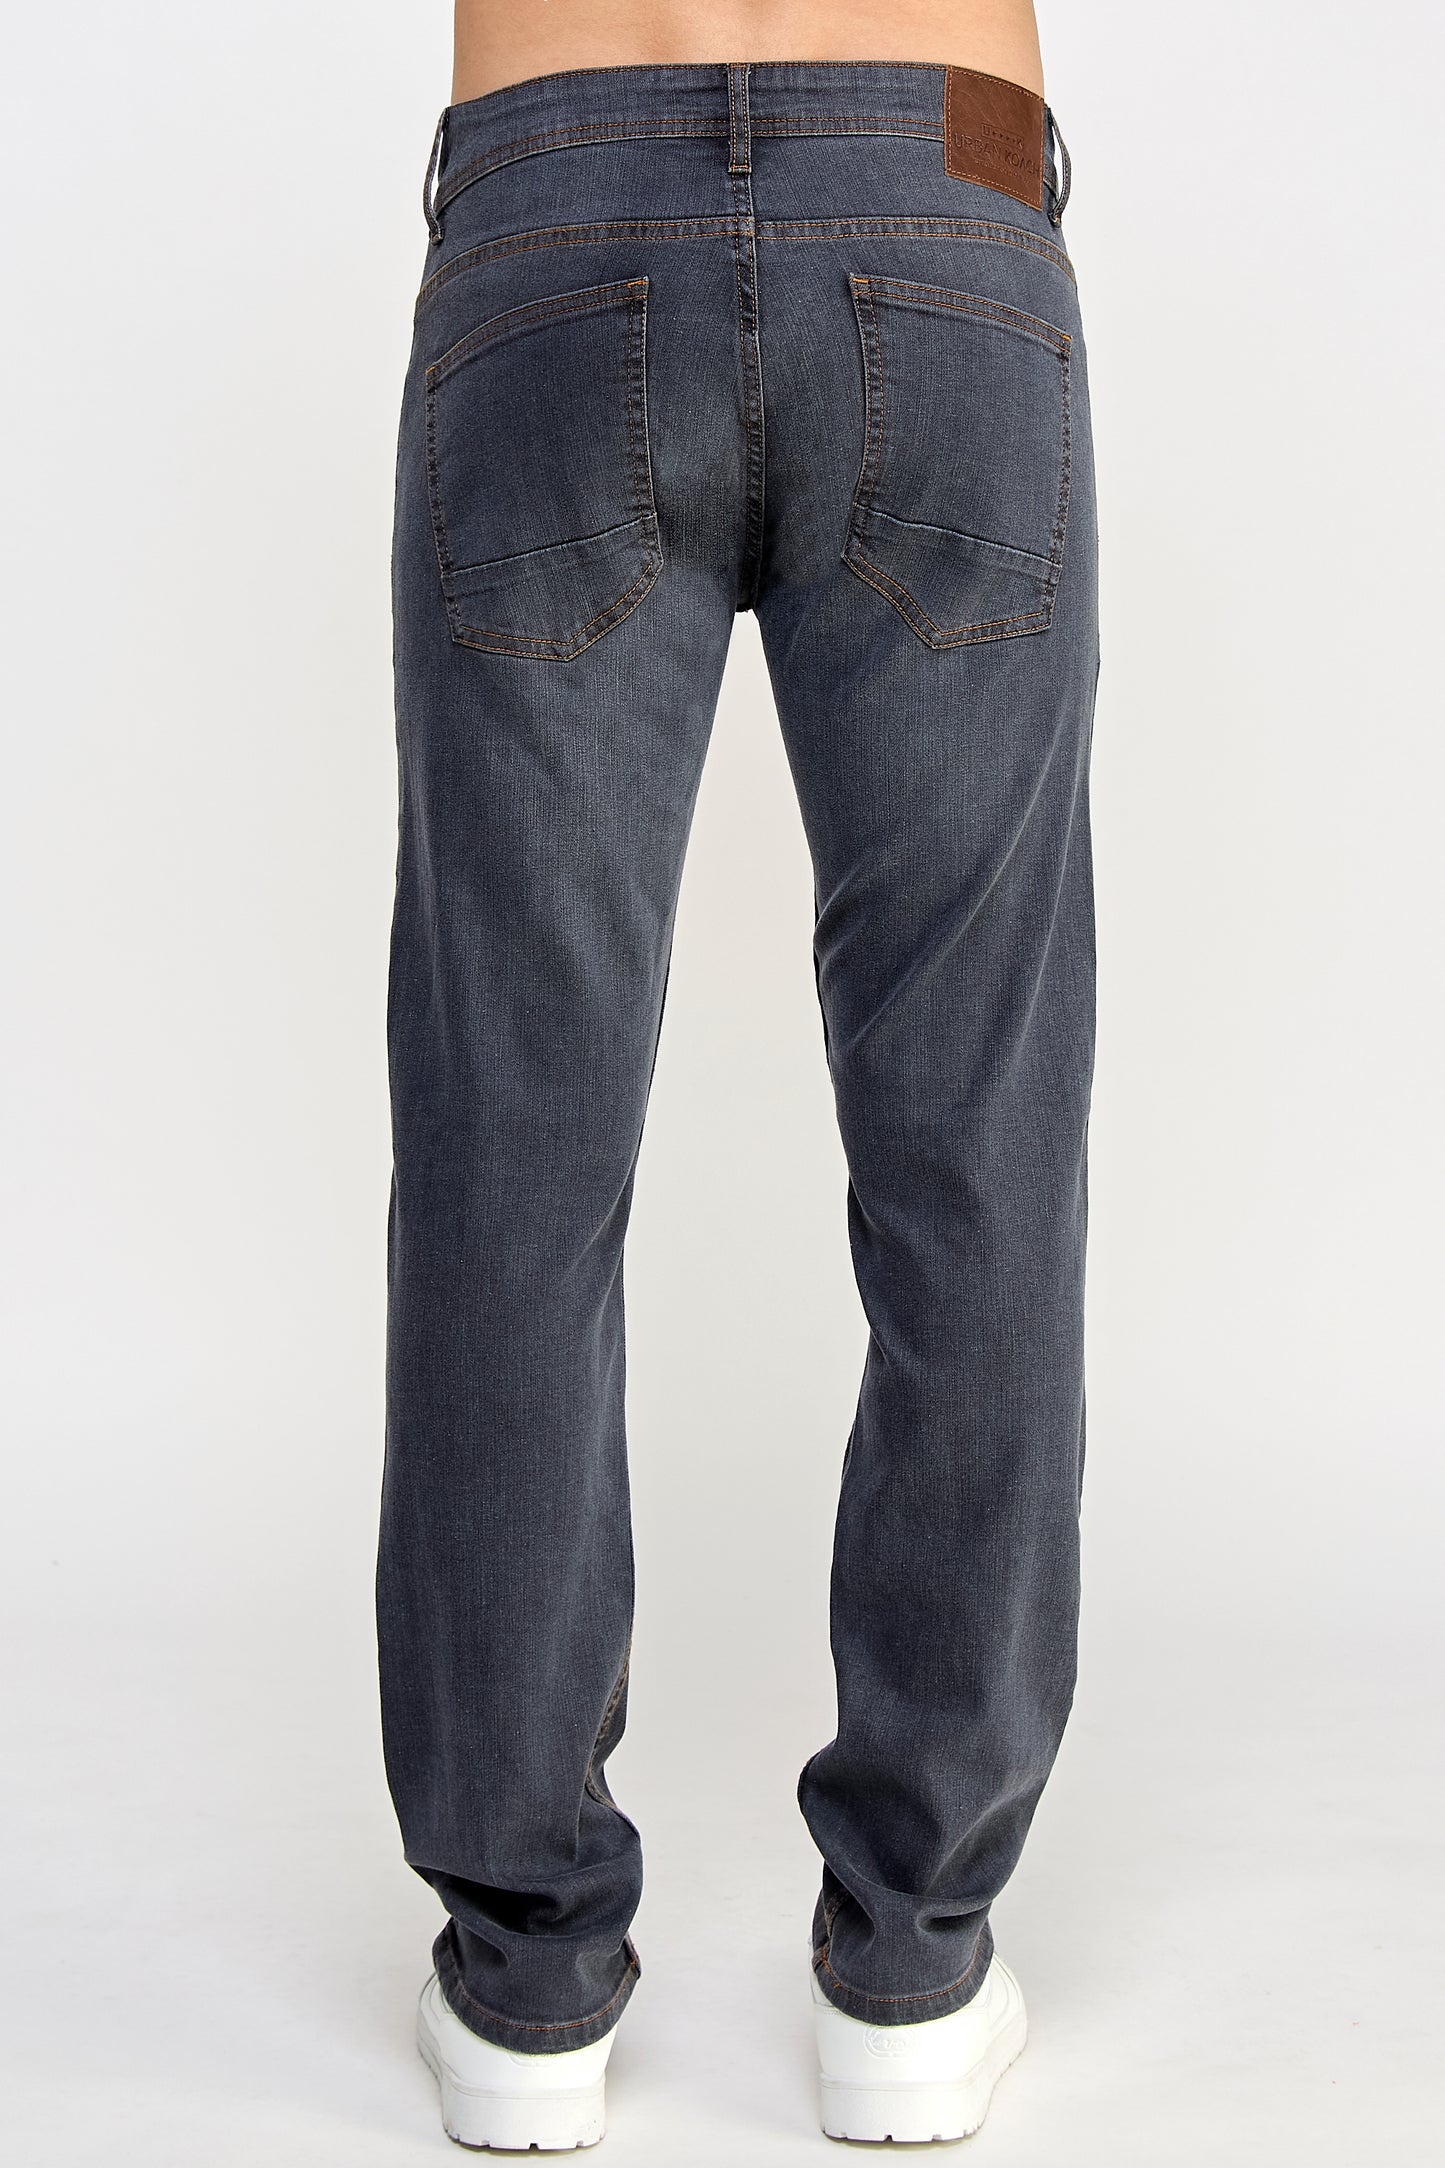 Graphite Denim Jeans